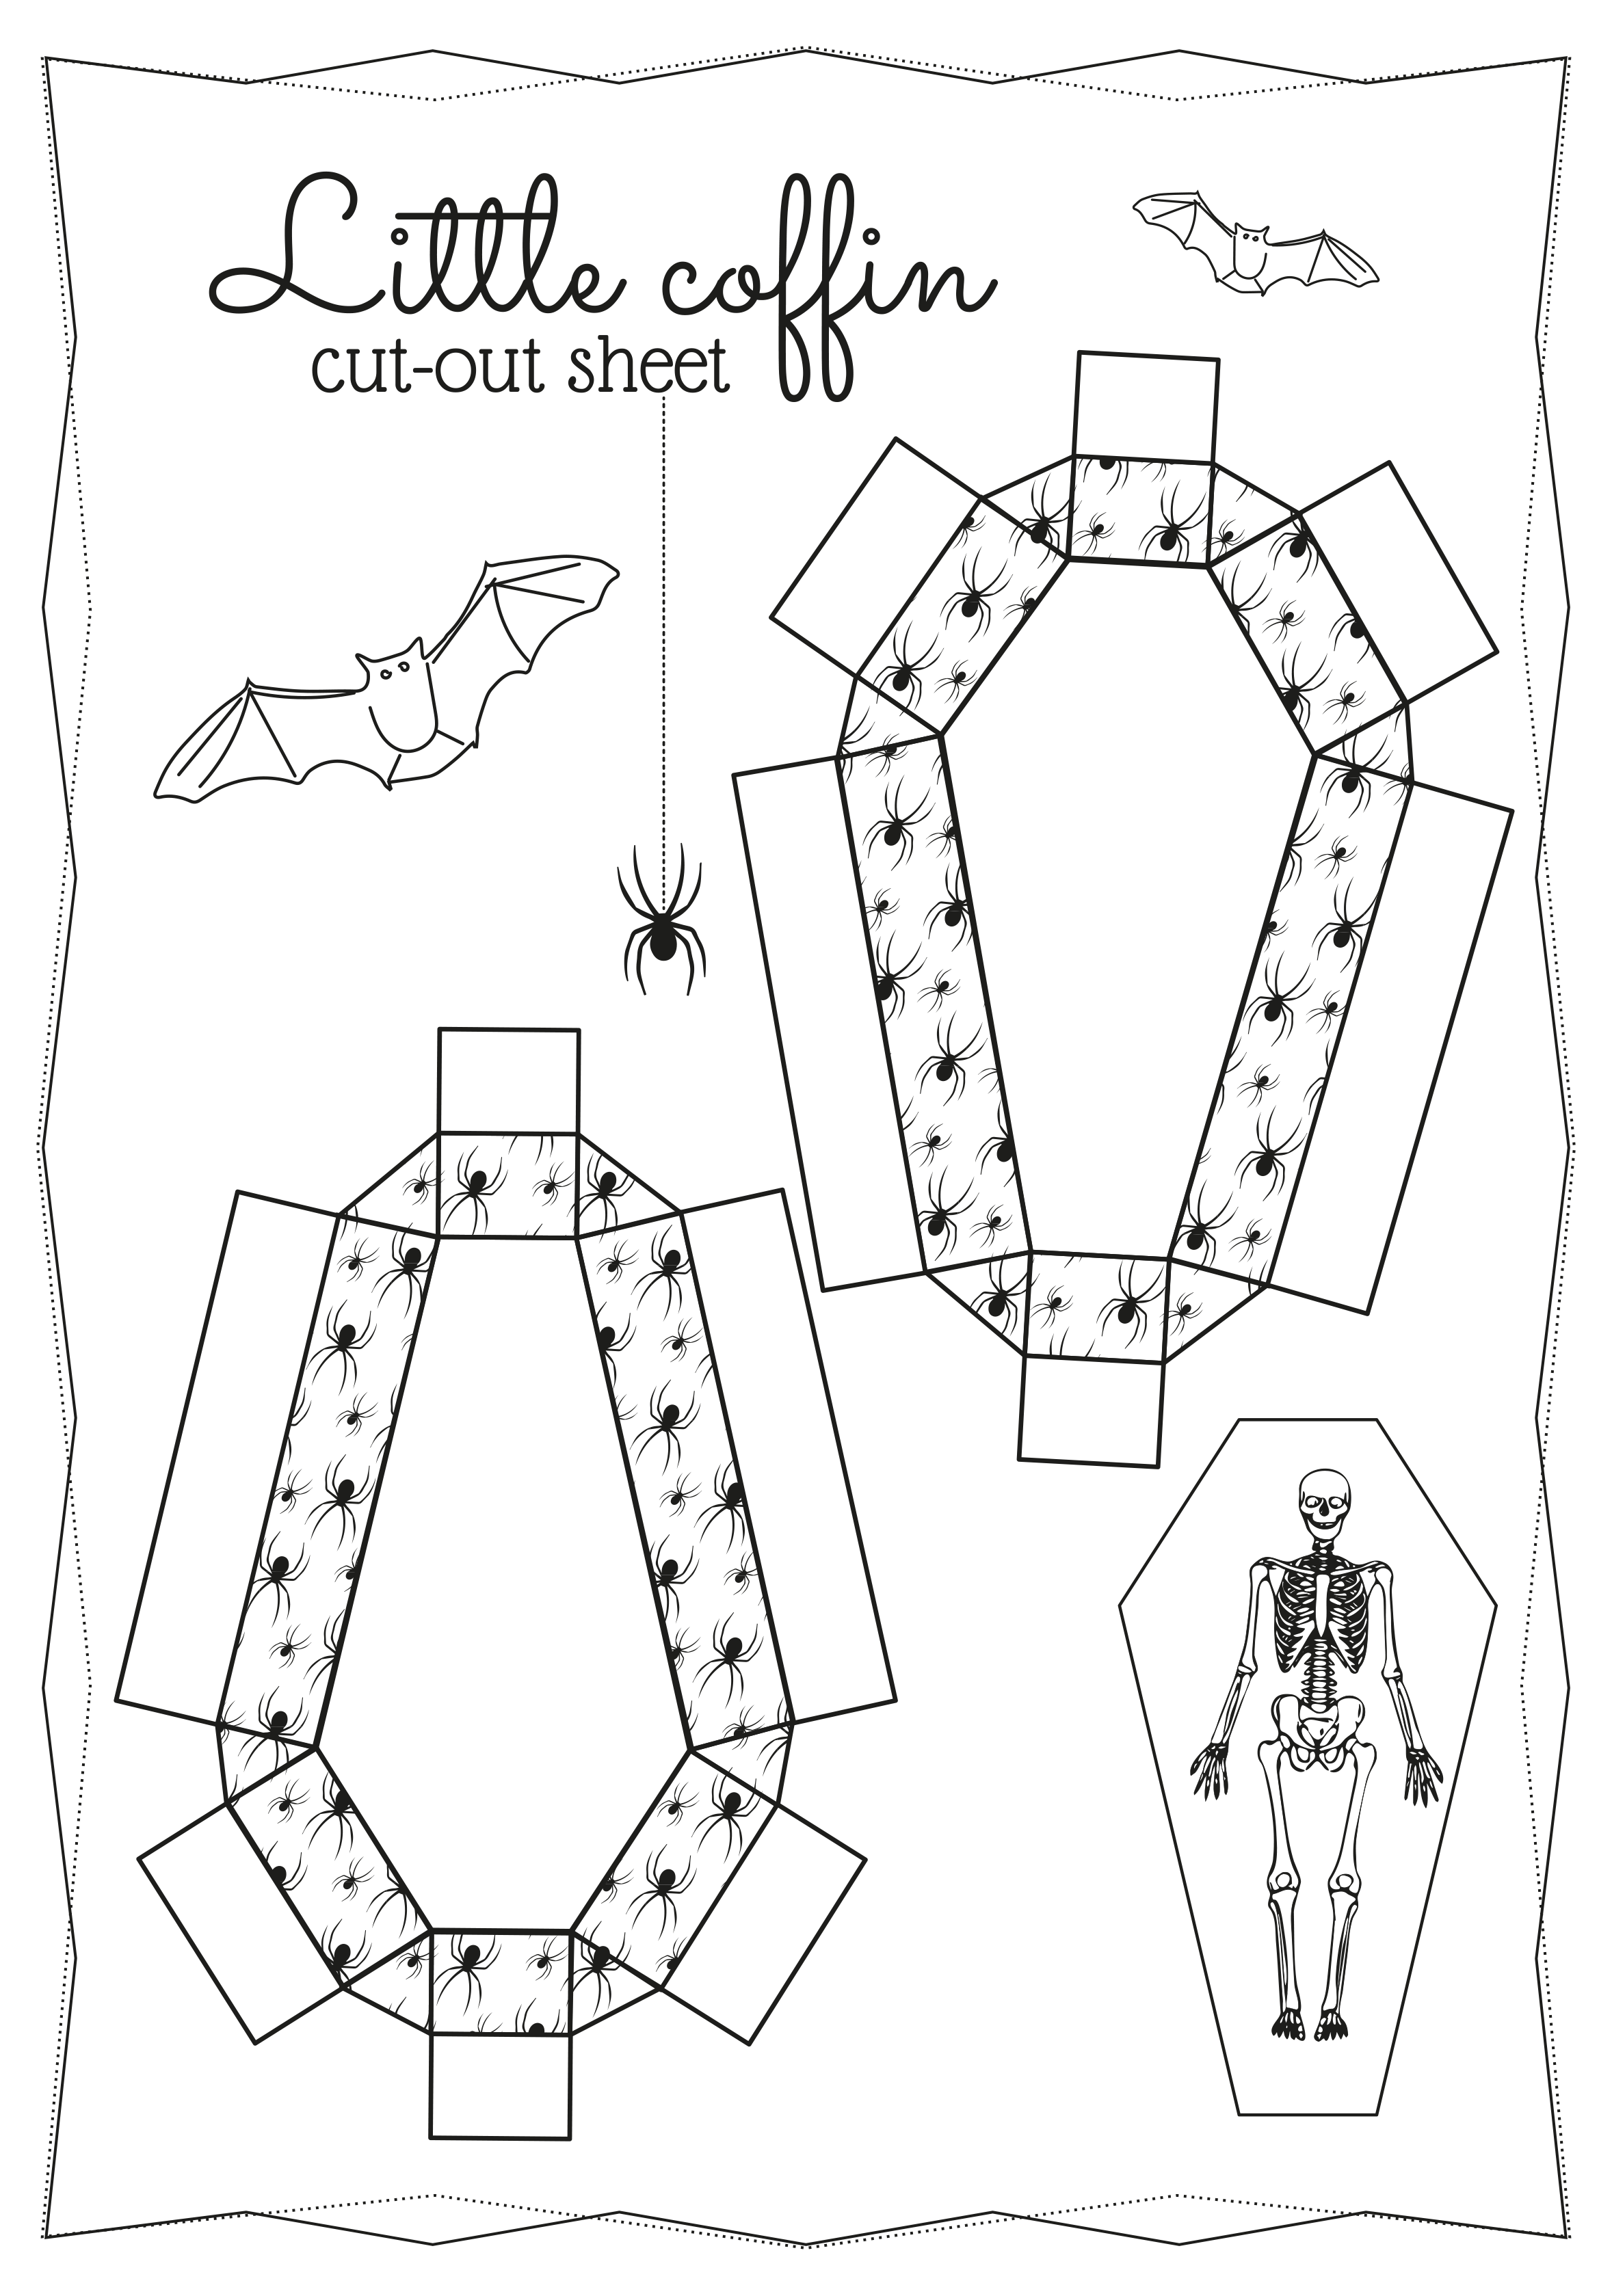 little-coffin-cutout-sheet-diy-cutout-coffin-web-design